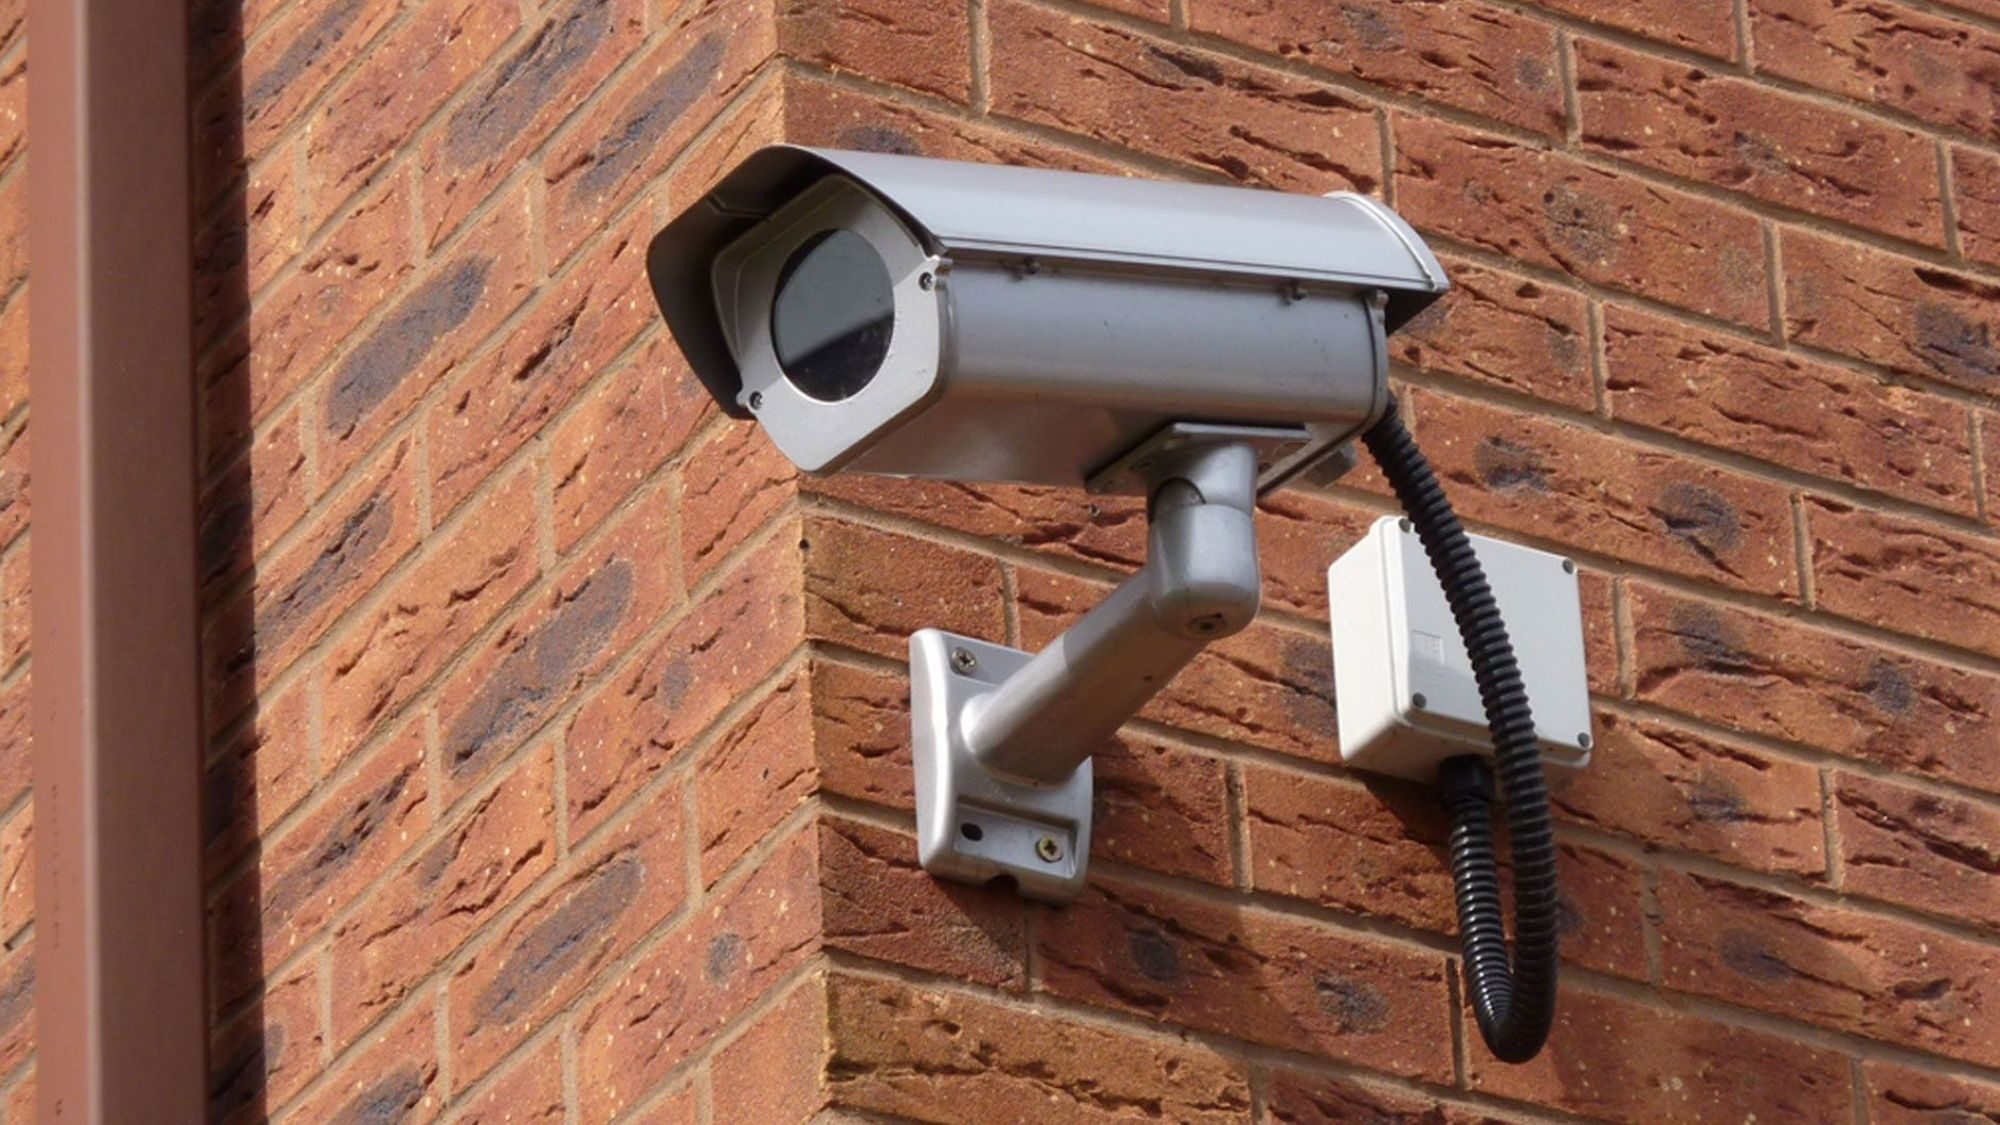 A CCTV camera fixed on a red bricks wall